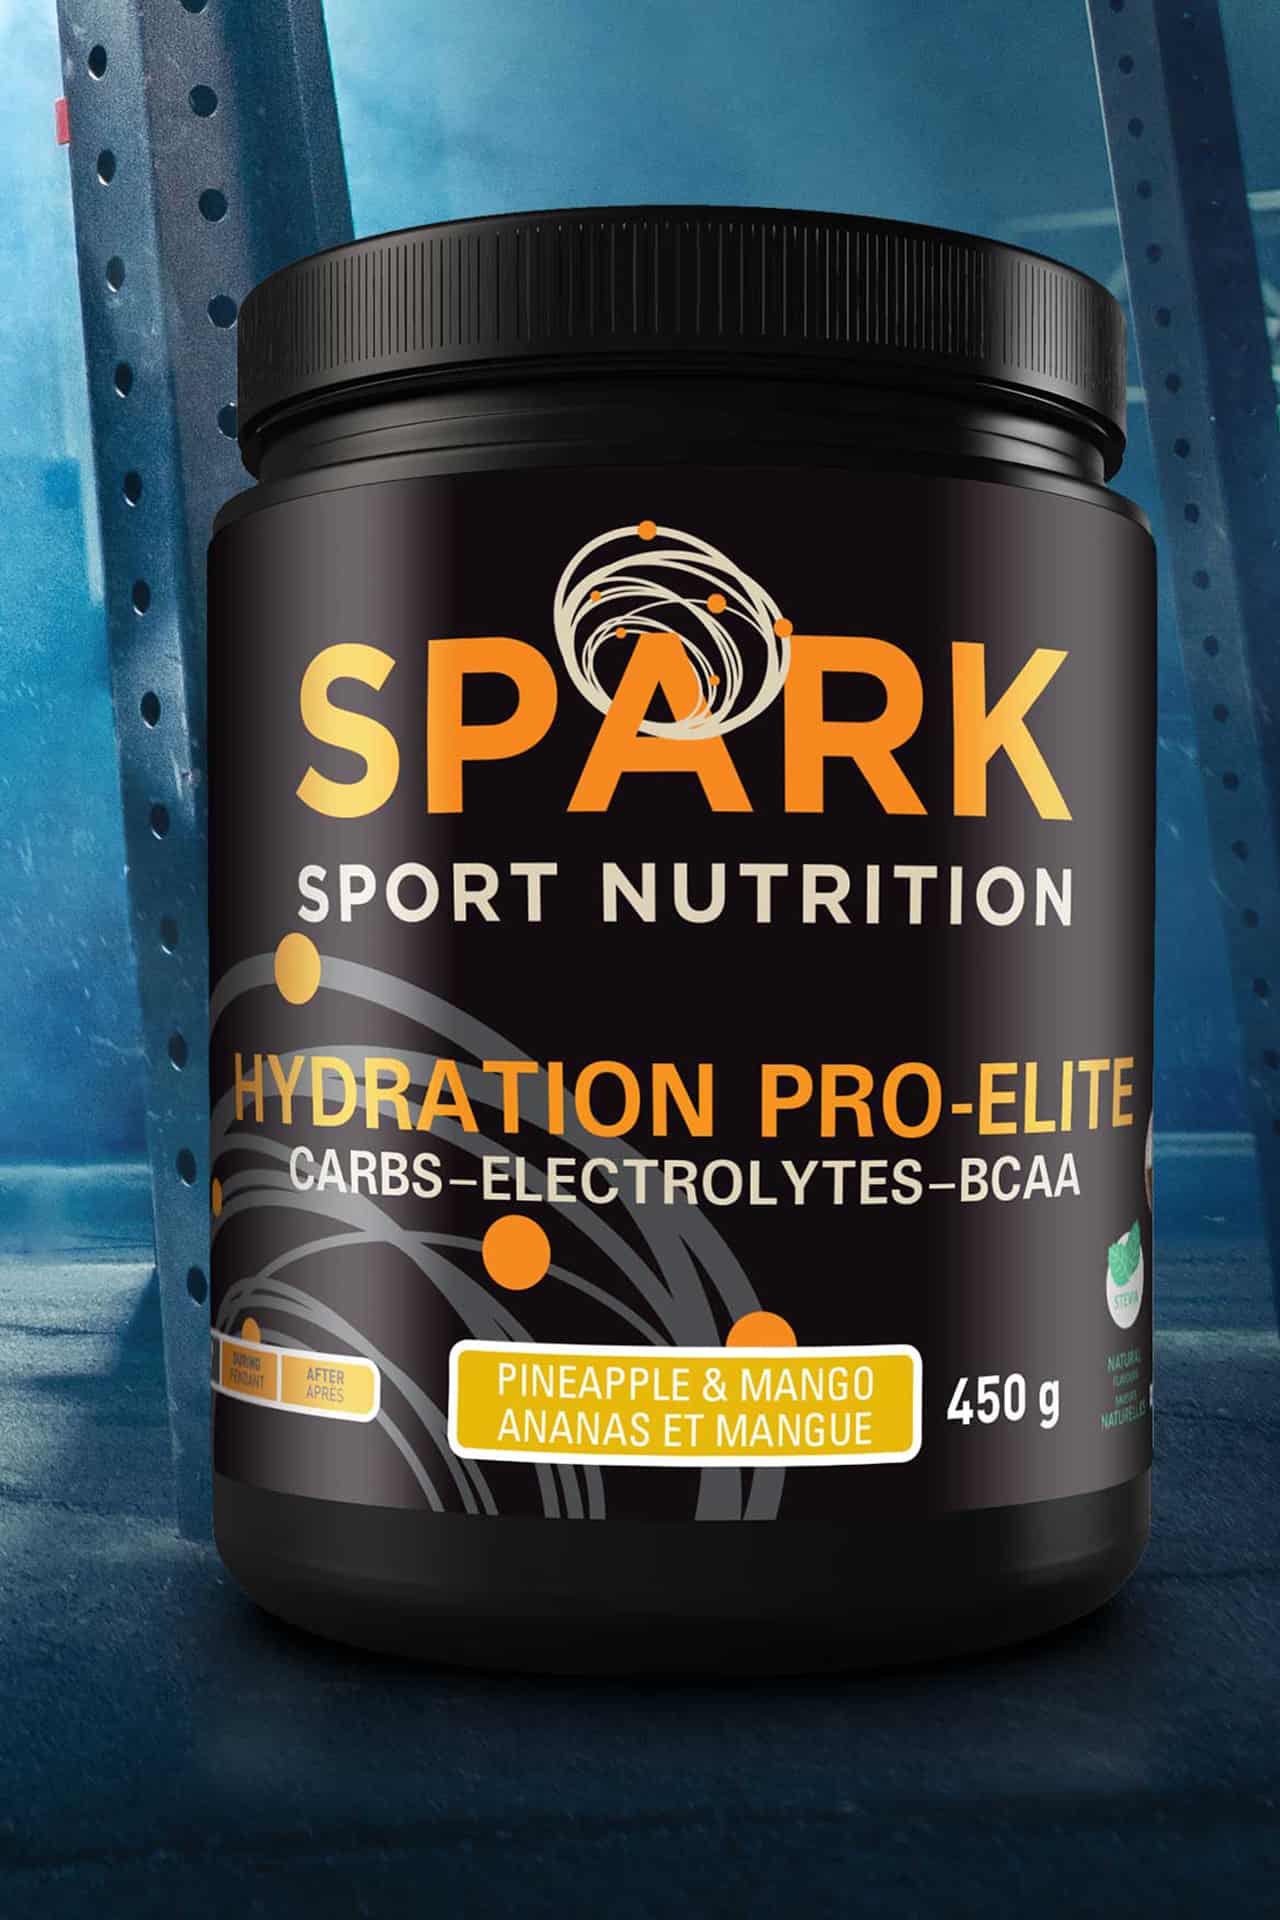 Spark Sports Nutrition label